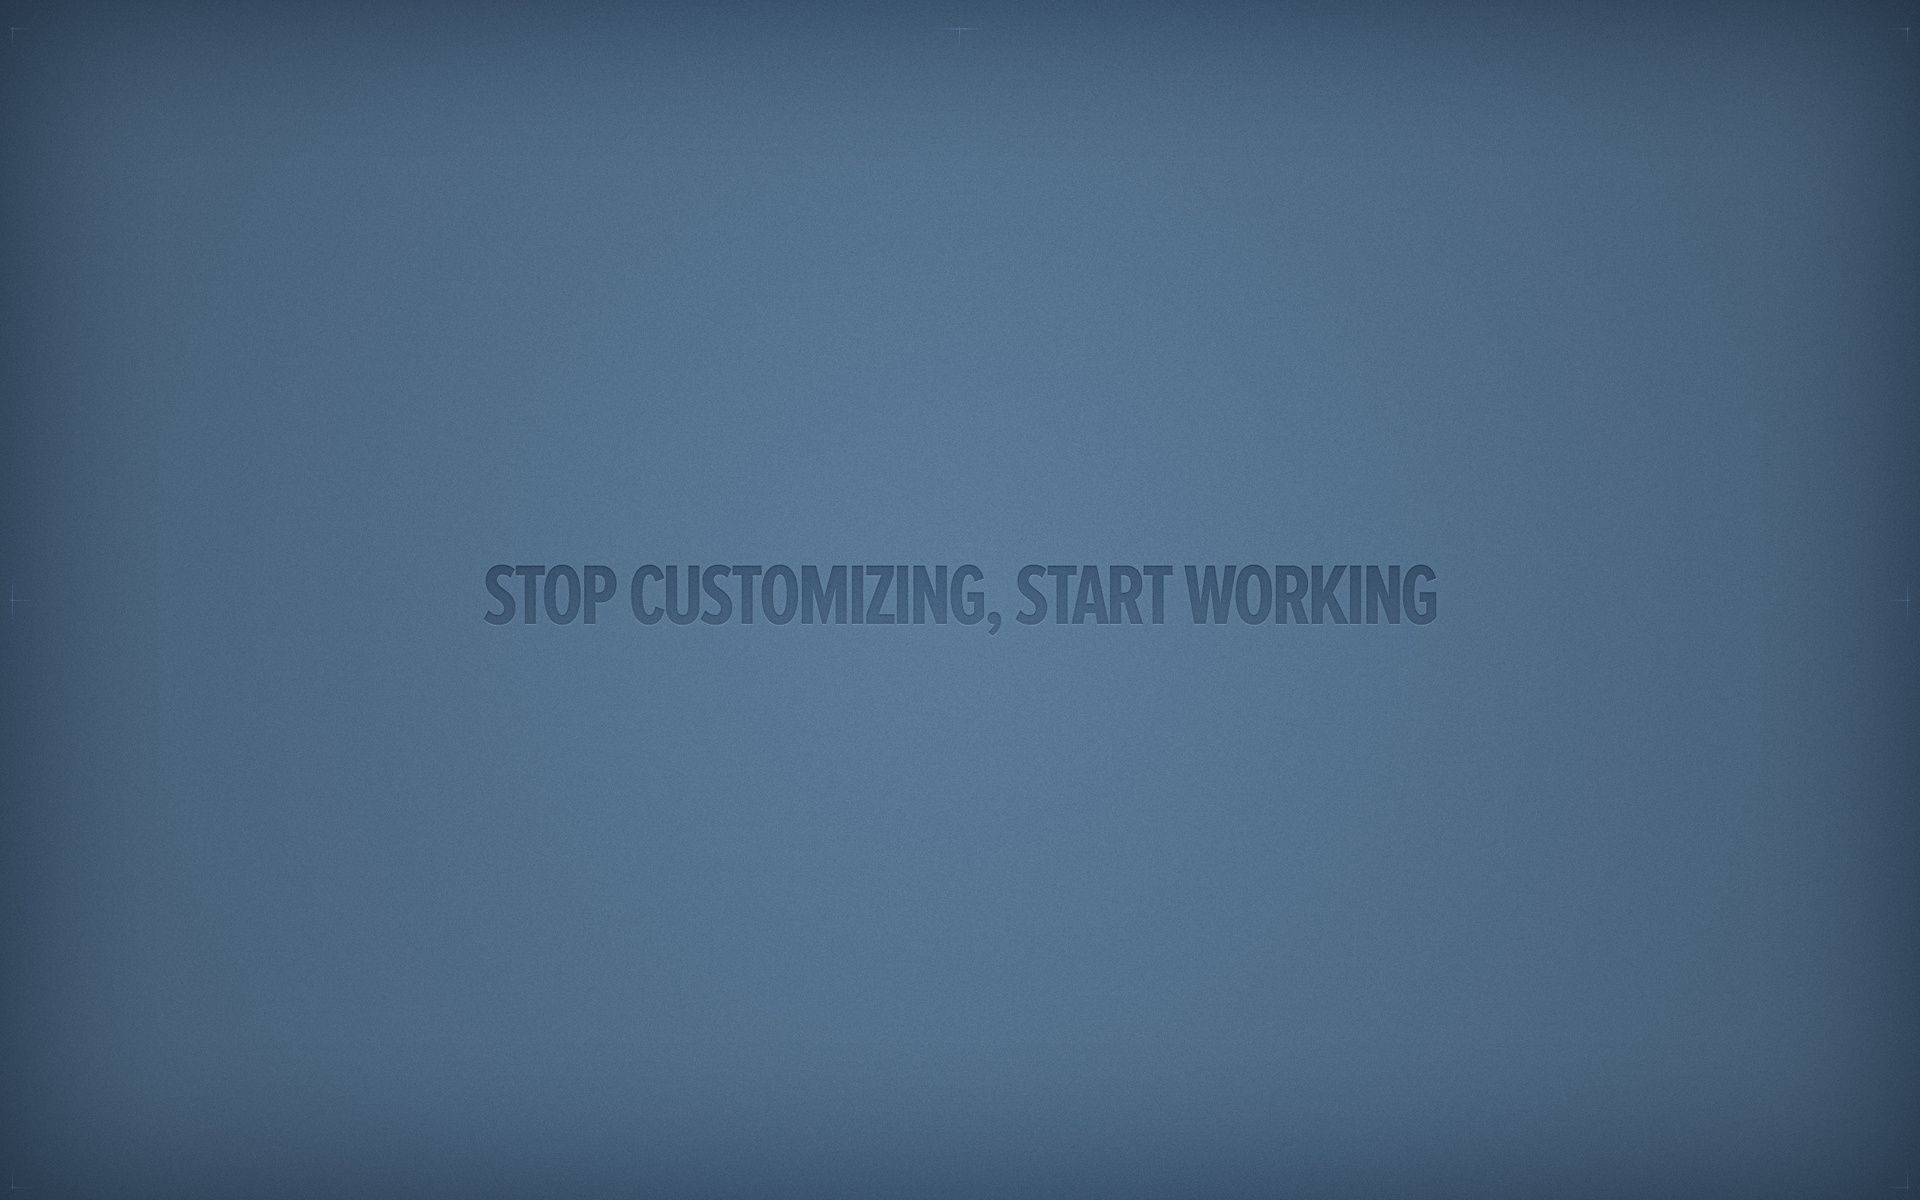 STOP-CUSTOMIZING-START-WORKING